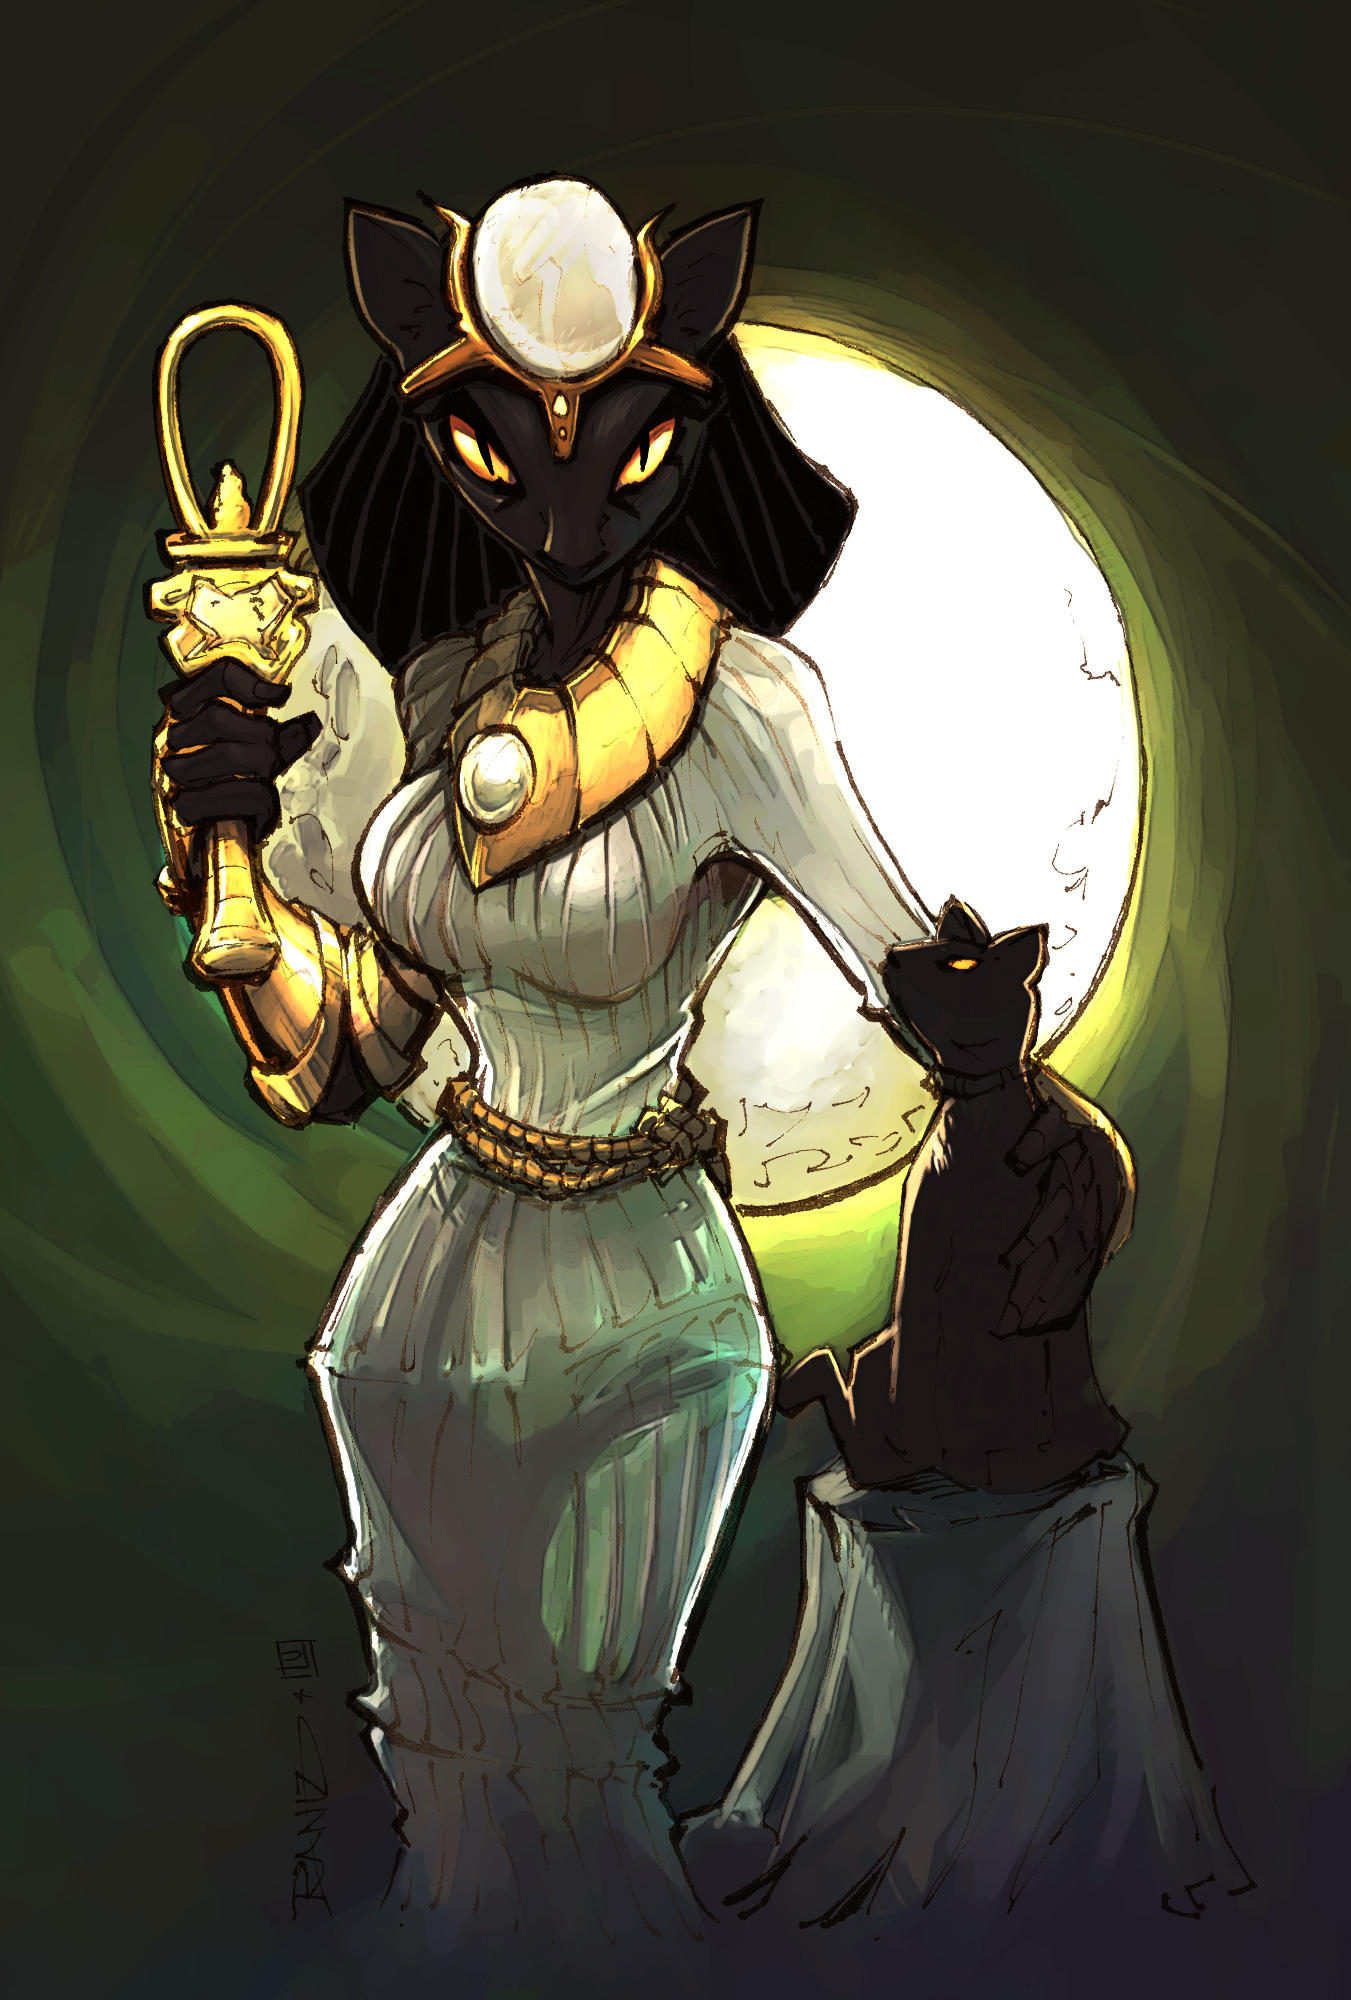 Баст дам. Баст Египетская богиня. Богиня кошек Бастет. Бастет богиня Египта. Богиня Египта кошка Бастет.